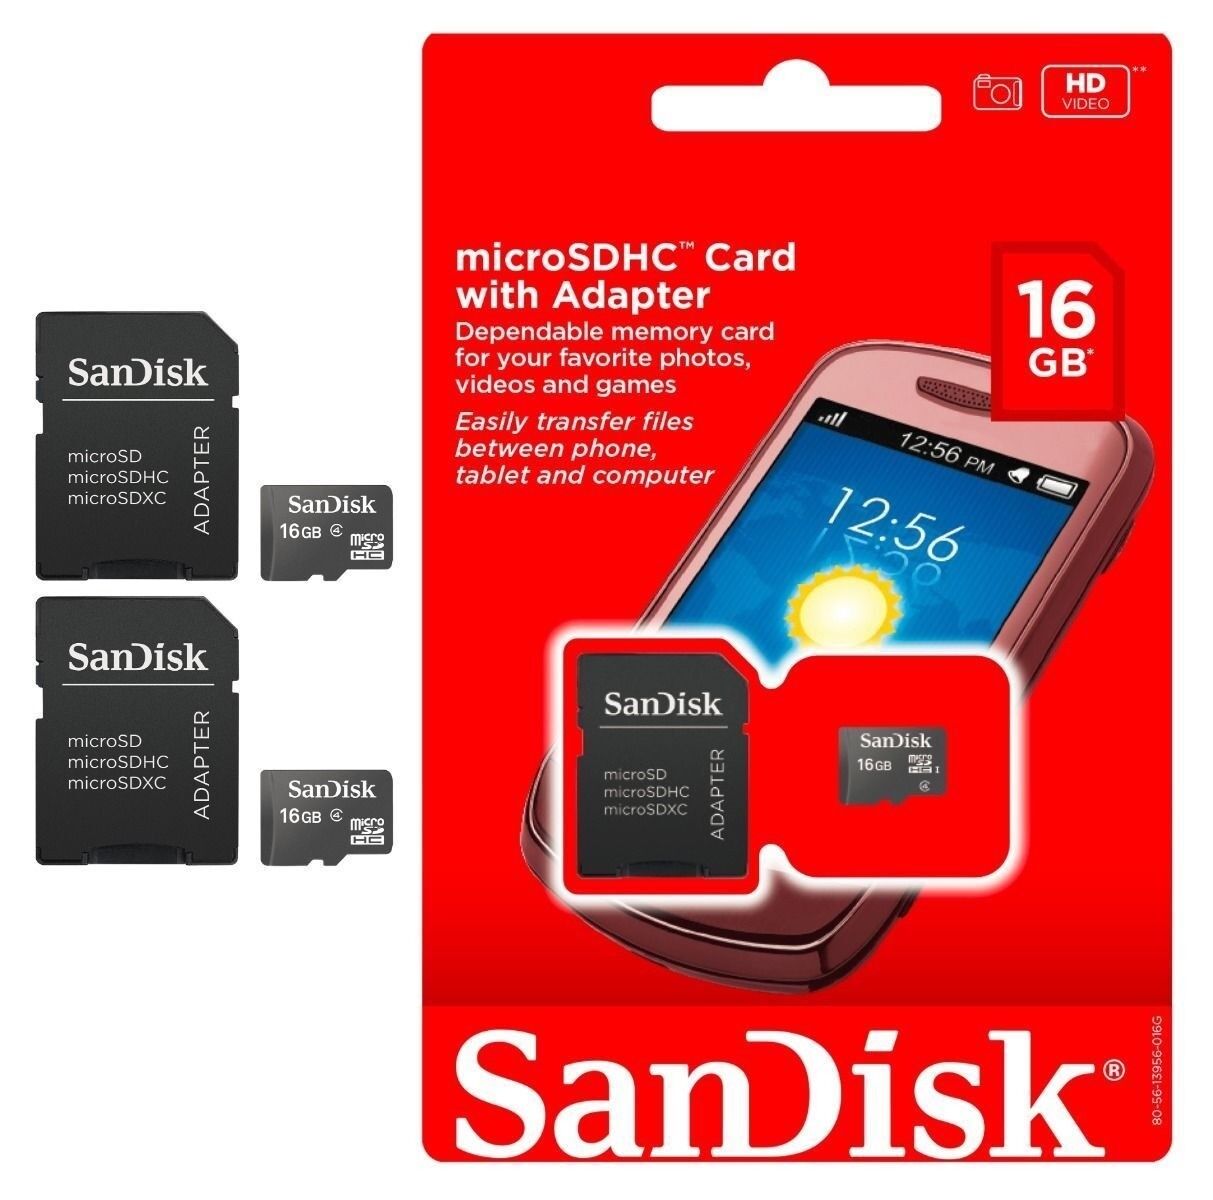 NEW SANDISK 16GB MicroSD Micro SD SDHC TF FLASH MEMORY CARD ADAPTER LOT 2 SanDisk sdsdq-016